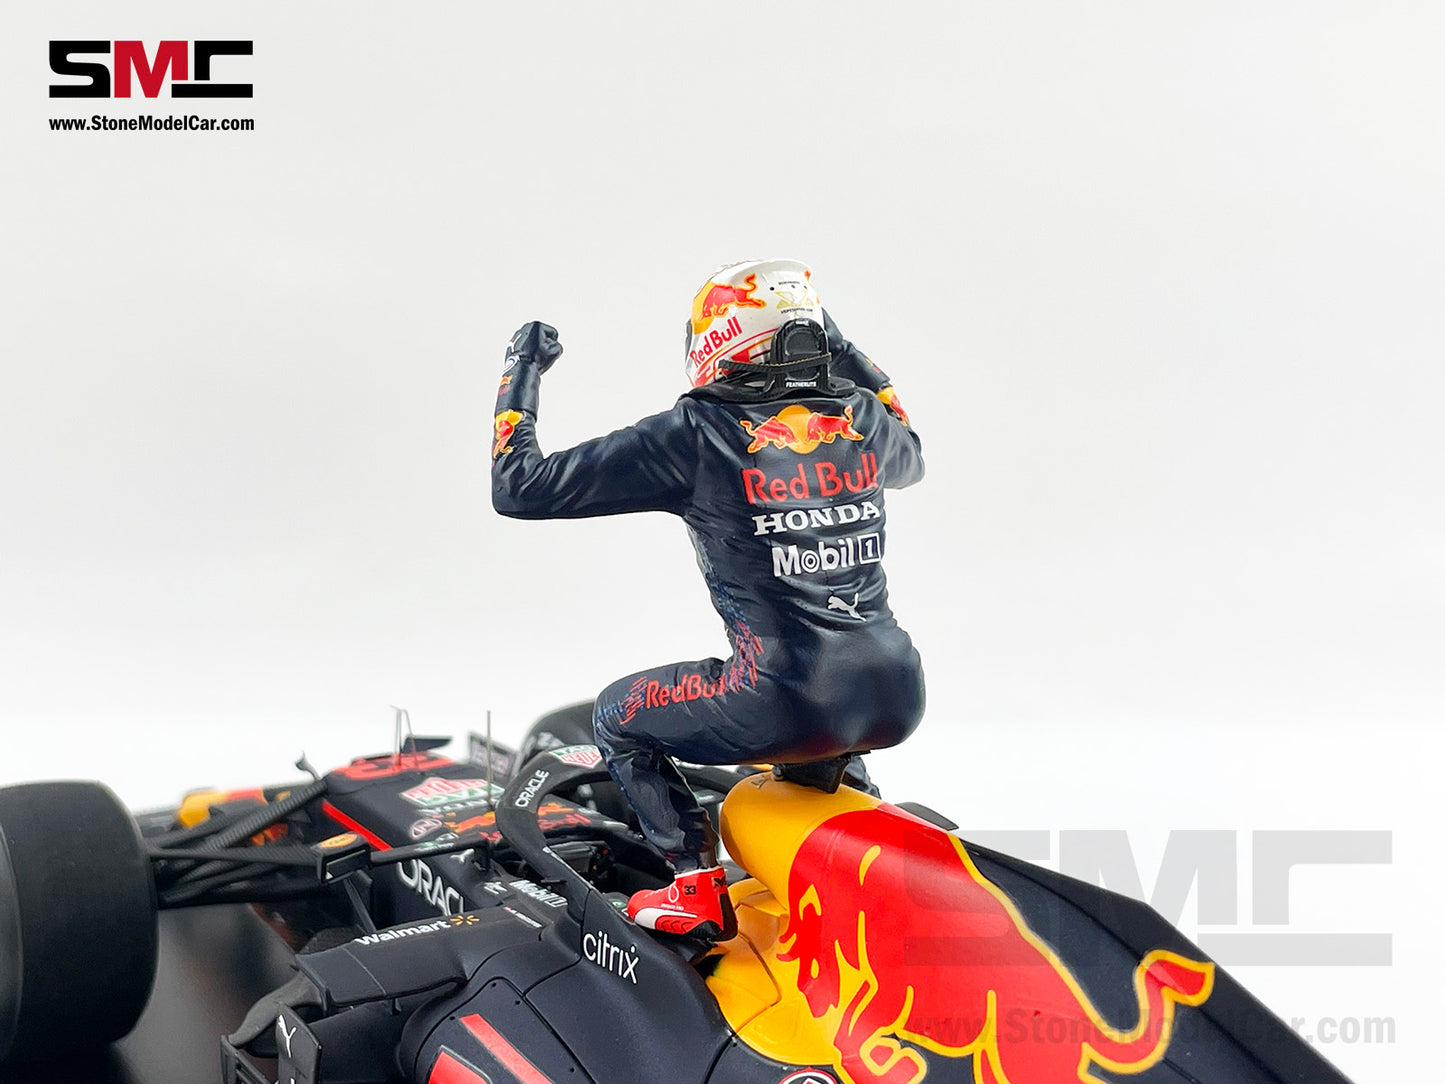 2021 F1 World Champion #33 Max Verstappen Red Bull RB16B Monaco GP 1:18 Spark with Figure